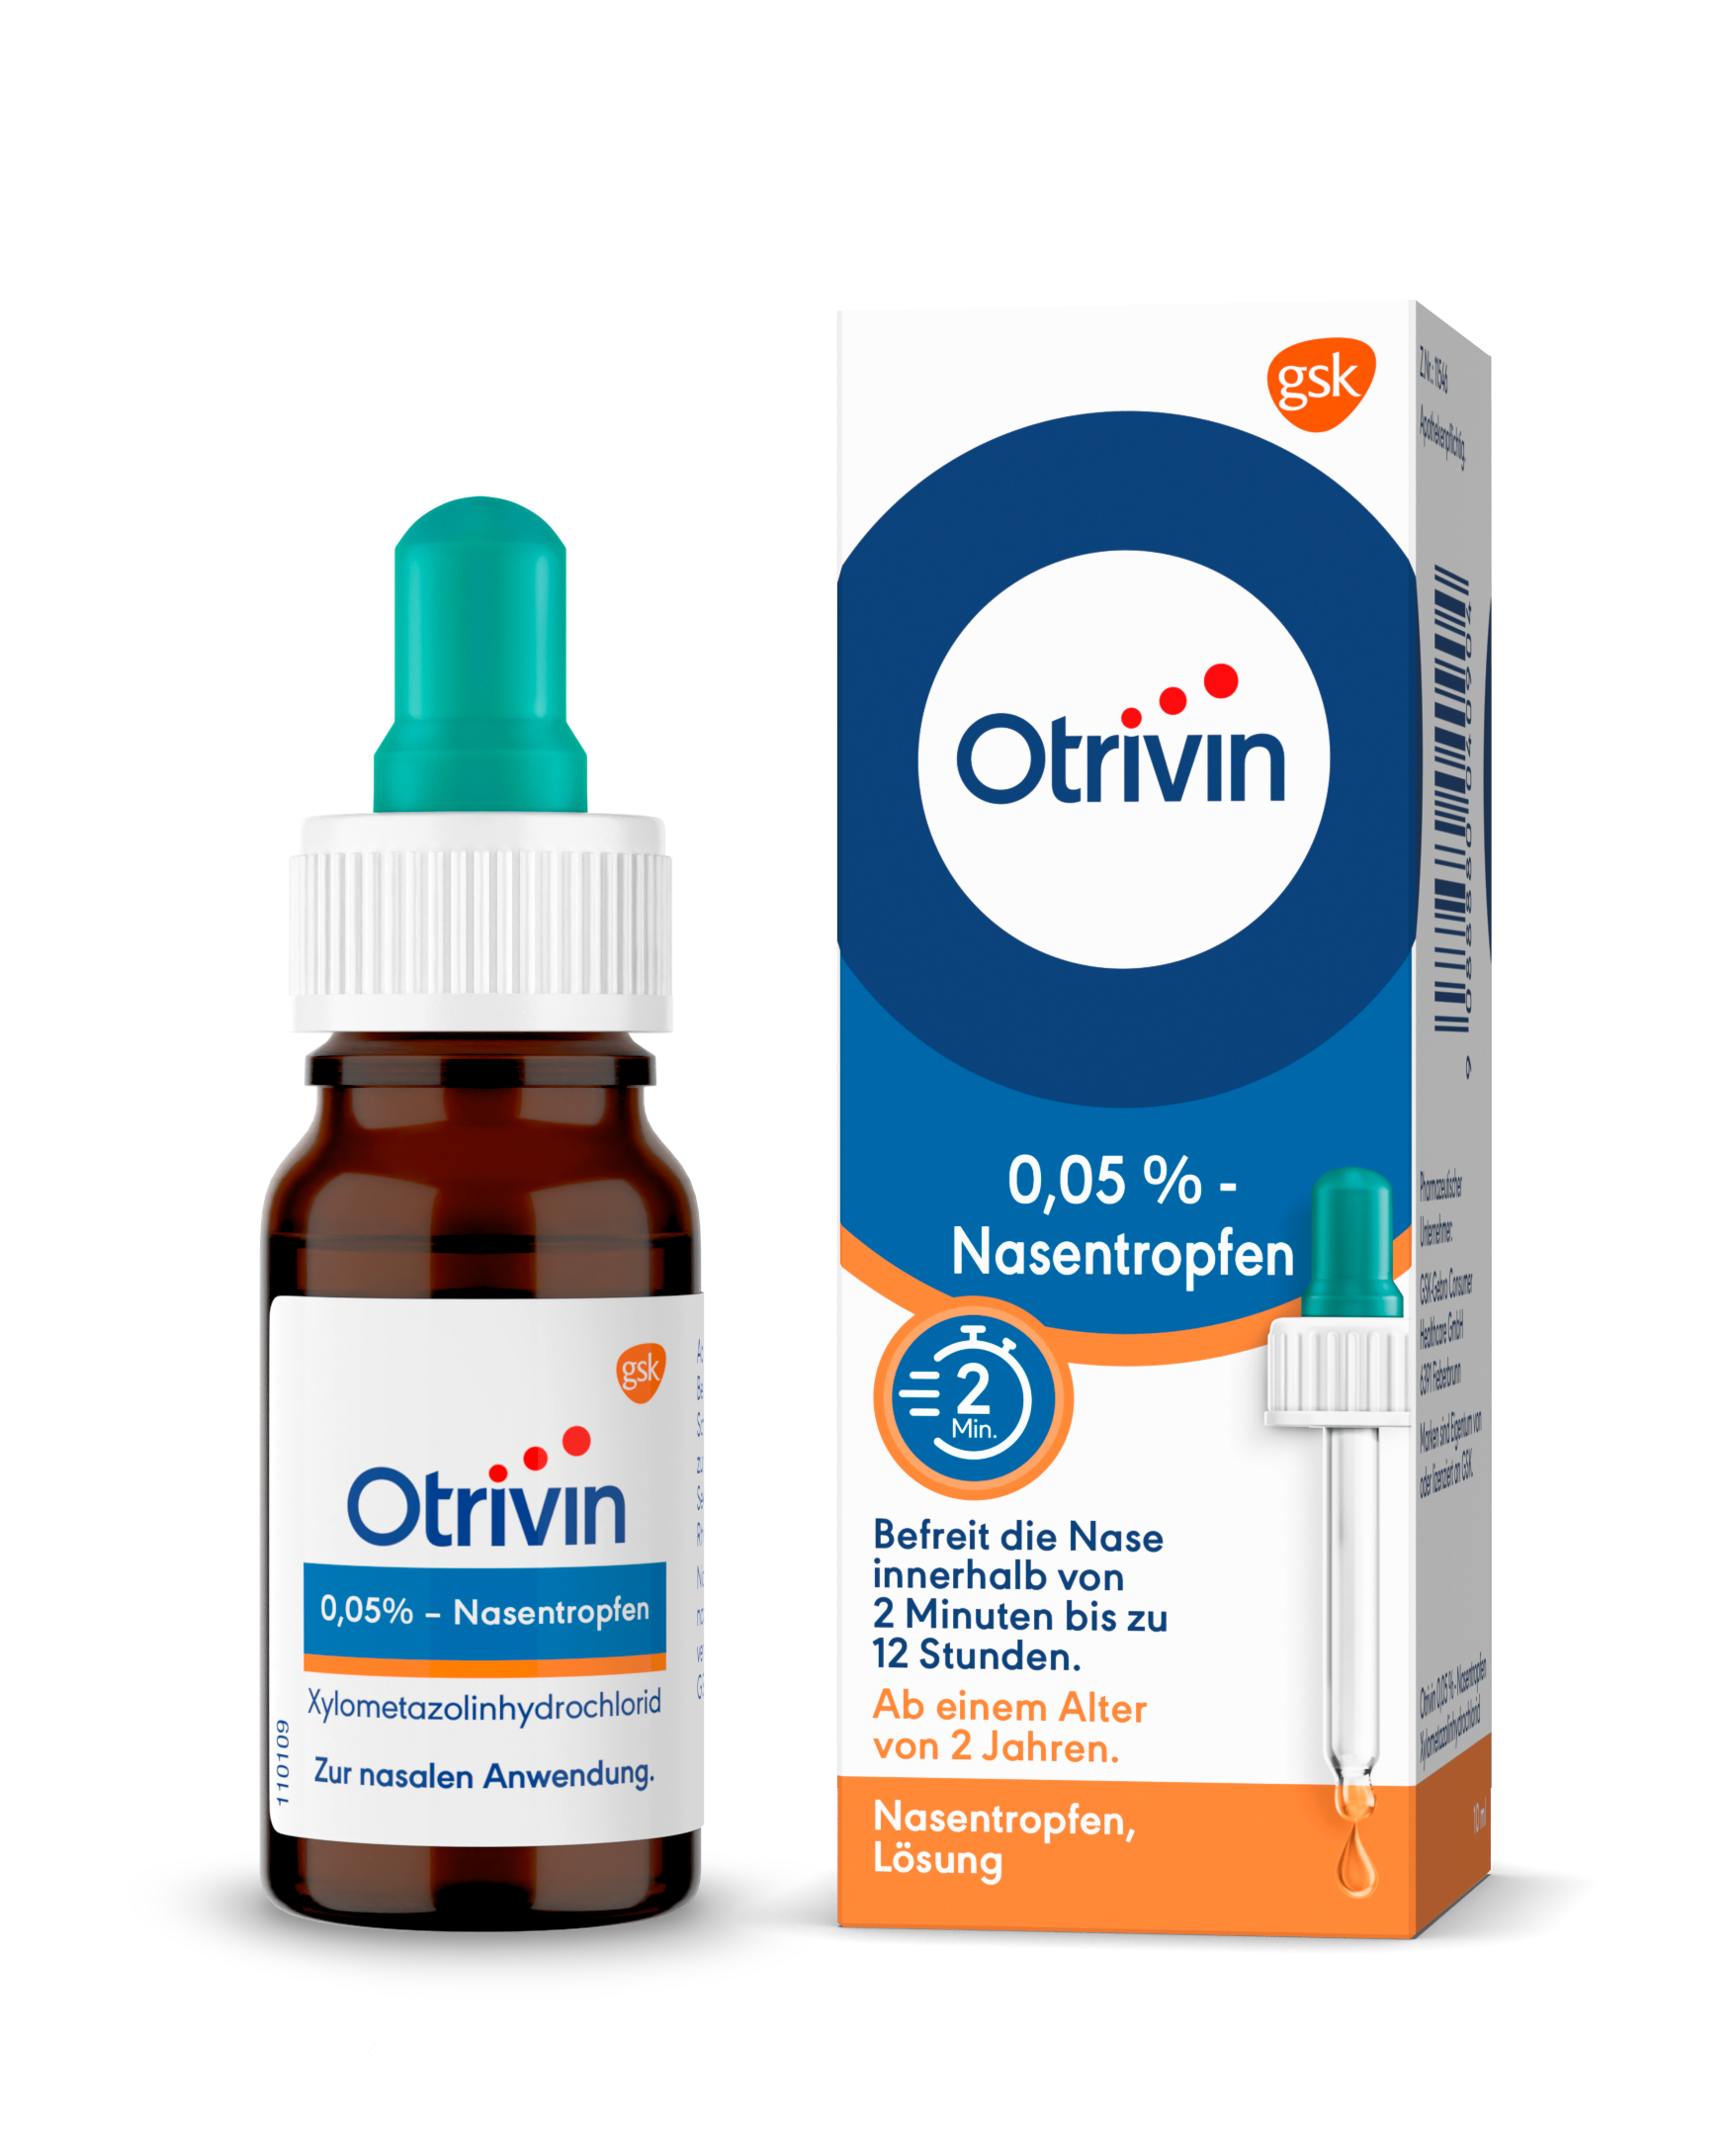 Otrivin 0,05 % - Nasentropfen